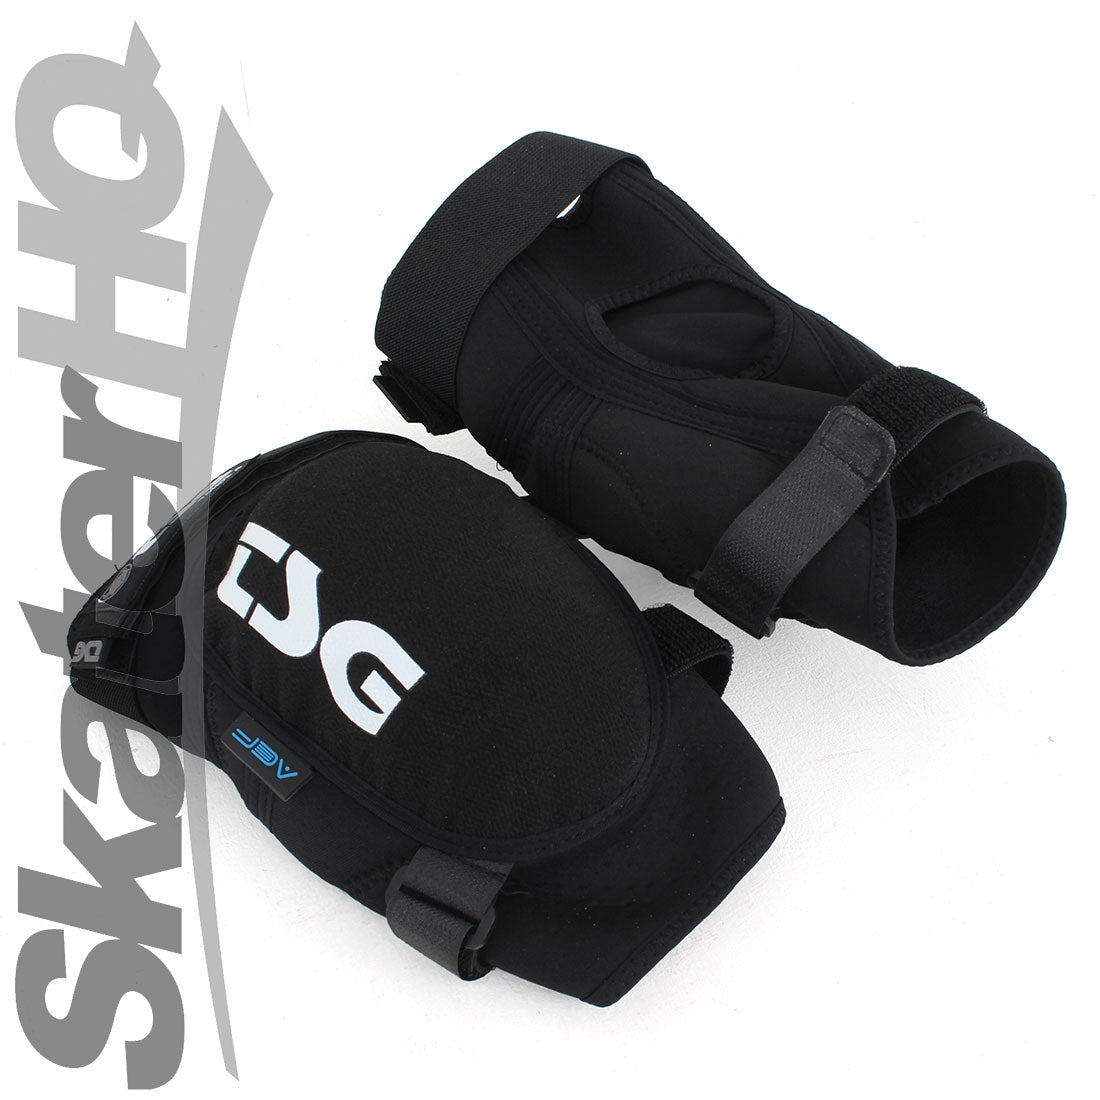 TSG Tahoe Arti-Lage Kneeguard Black - Large Protective Gear